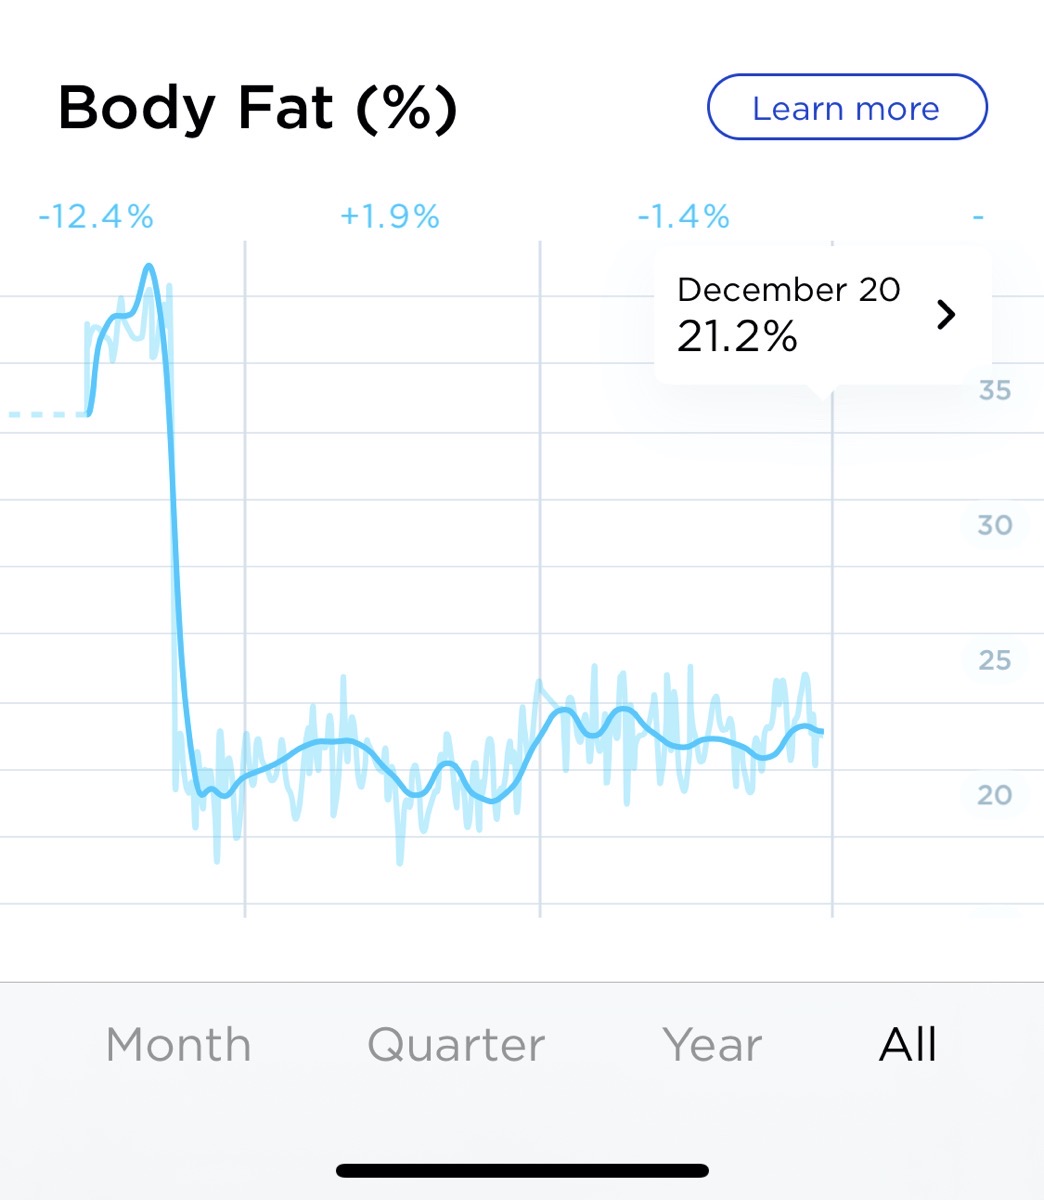 https://www.podfeet.com/blog/wp-content/uploads/2020/06/Withings-Body-Fat-Measurements.jpeg